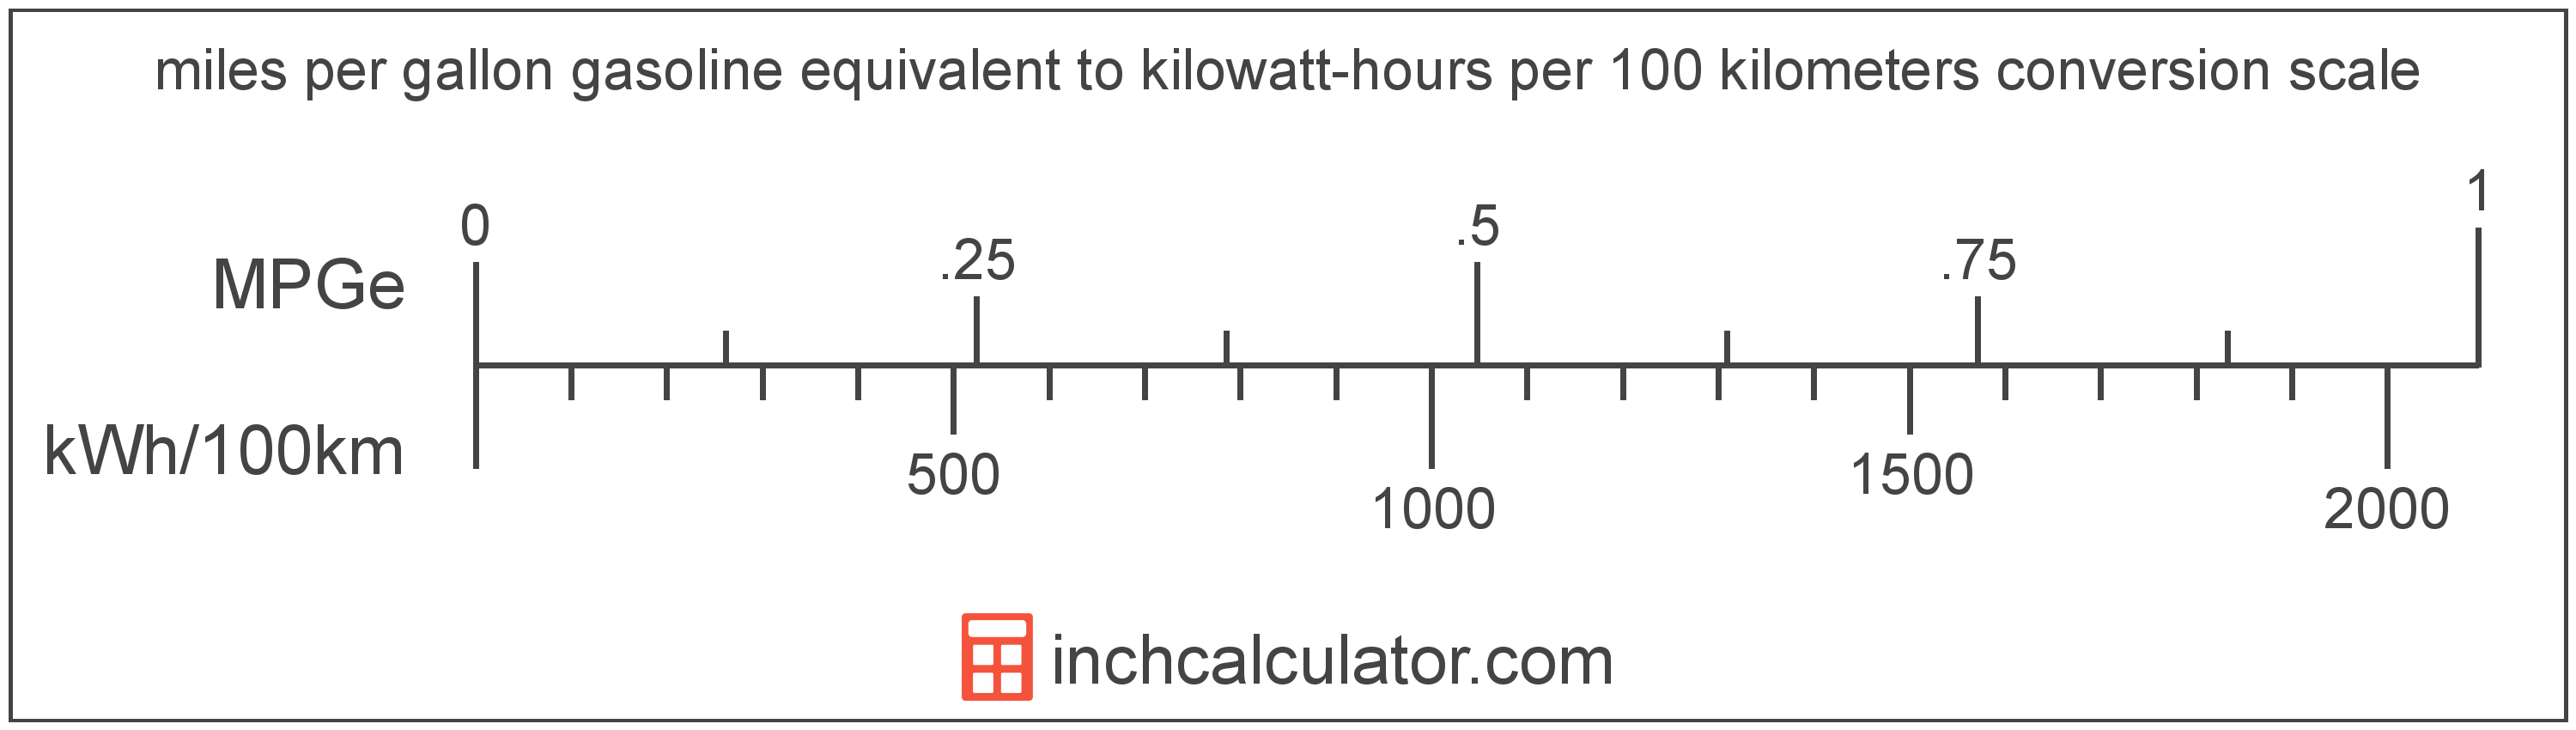 conversion scale showing miles per gallon gasoline equivalent and equivalent kilowatt-hours per 100 kilometers electric car efficiency values